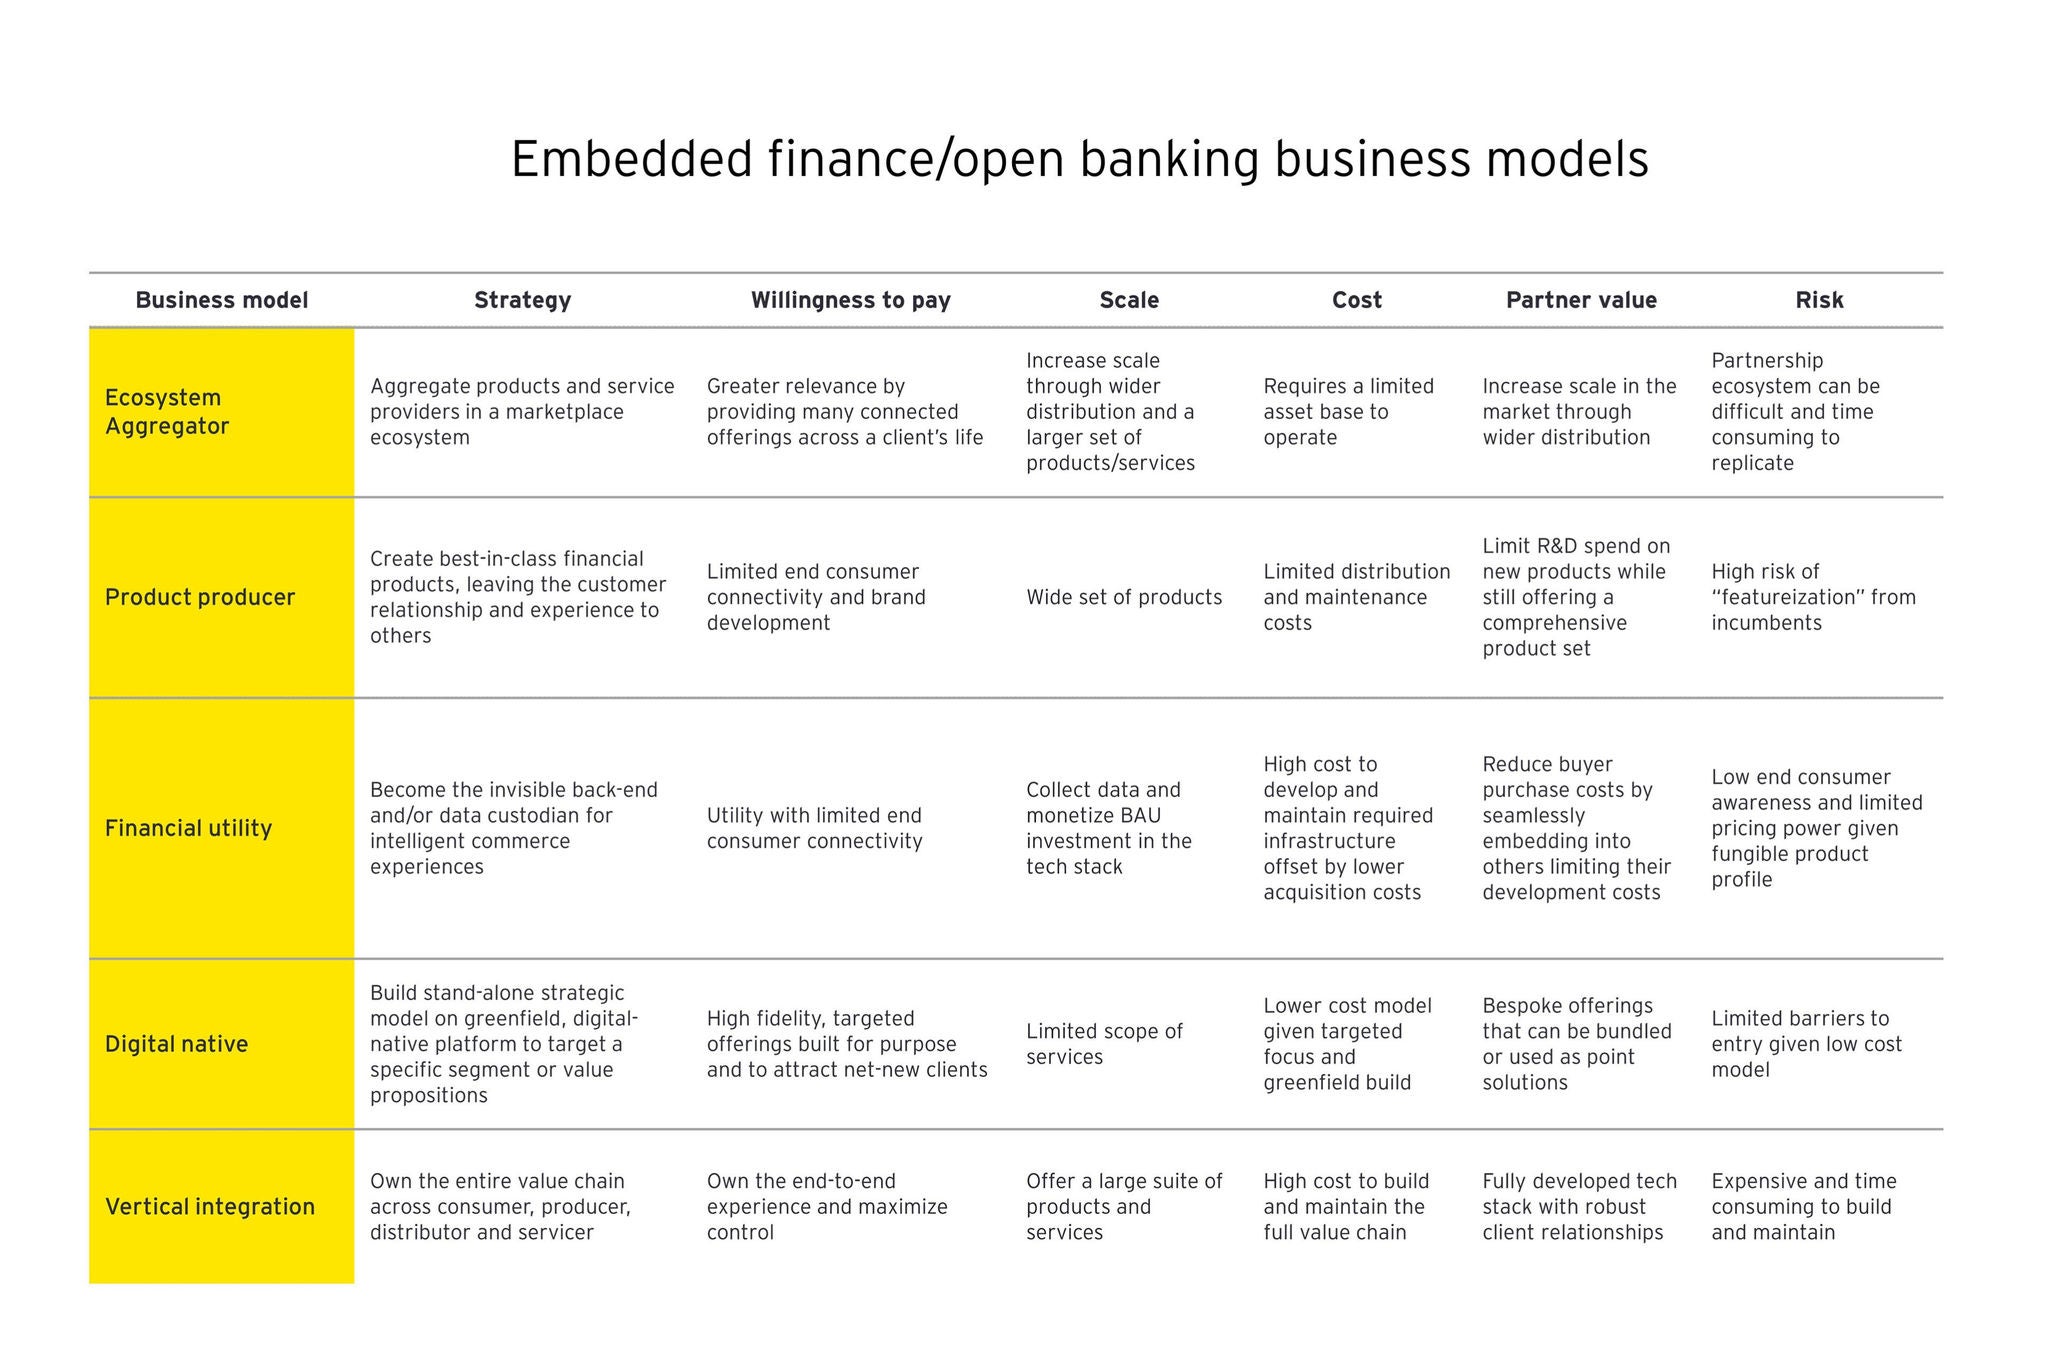 EY Embedded Finance Open Banking Business Models